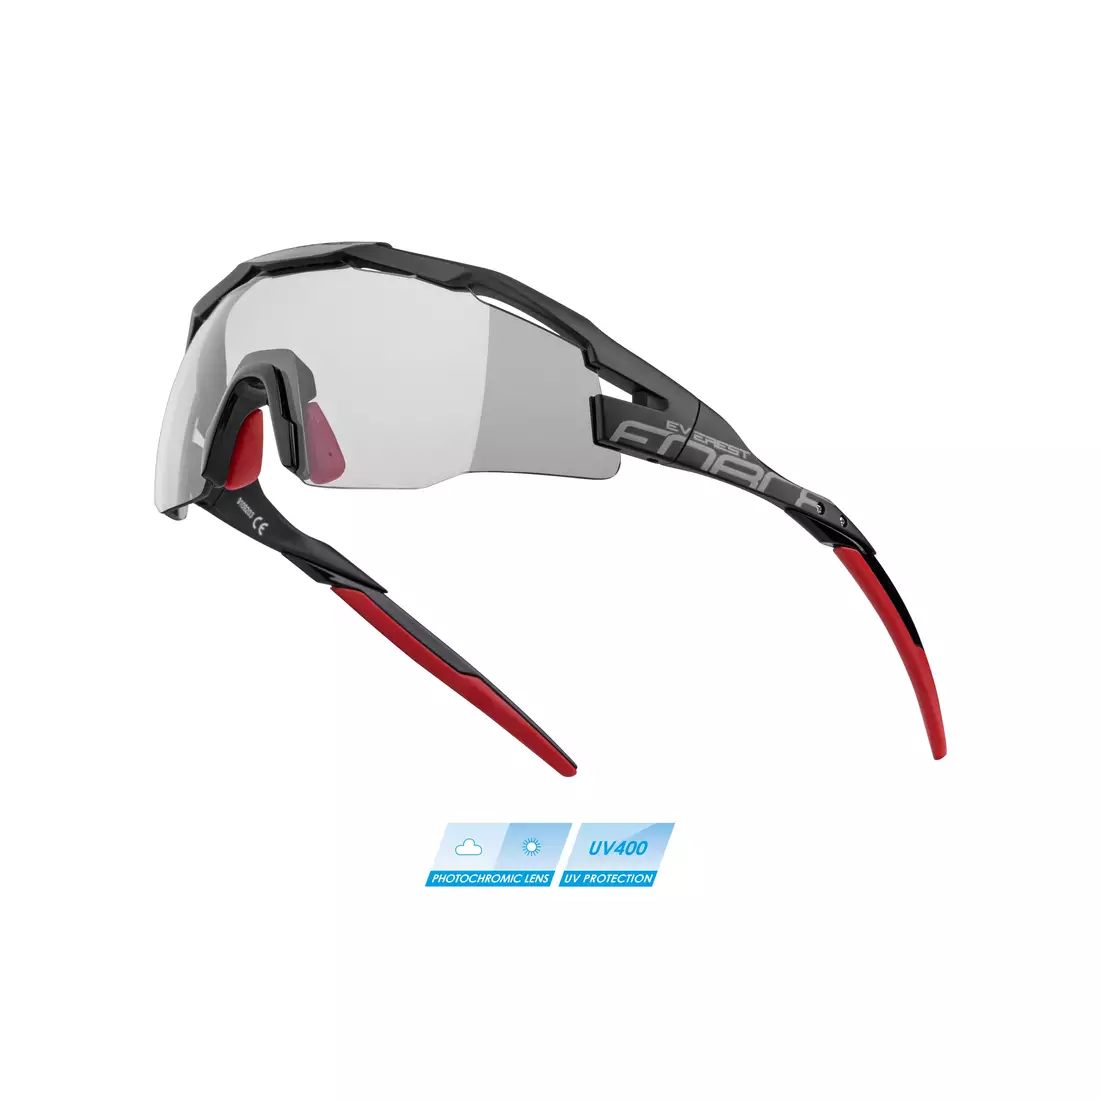 FORCE cycling / sports glasses EVEREST photochromic, black mat, 9109203